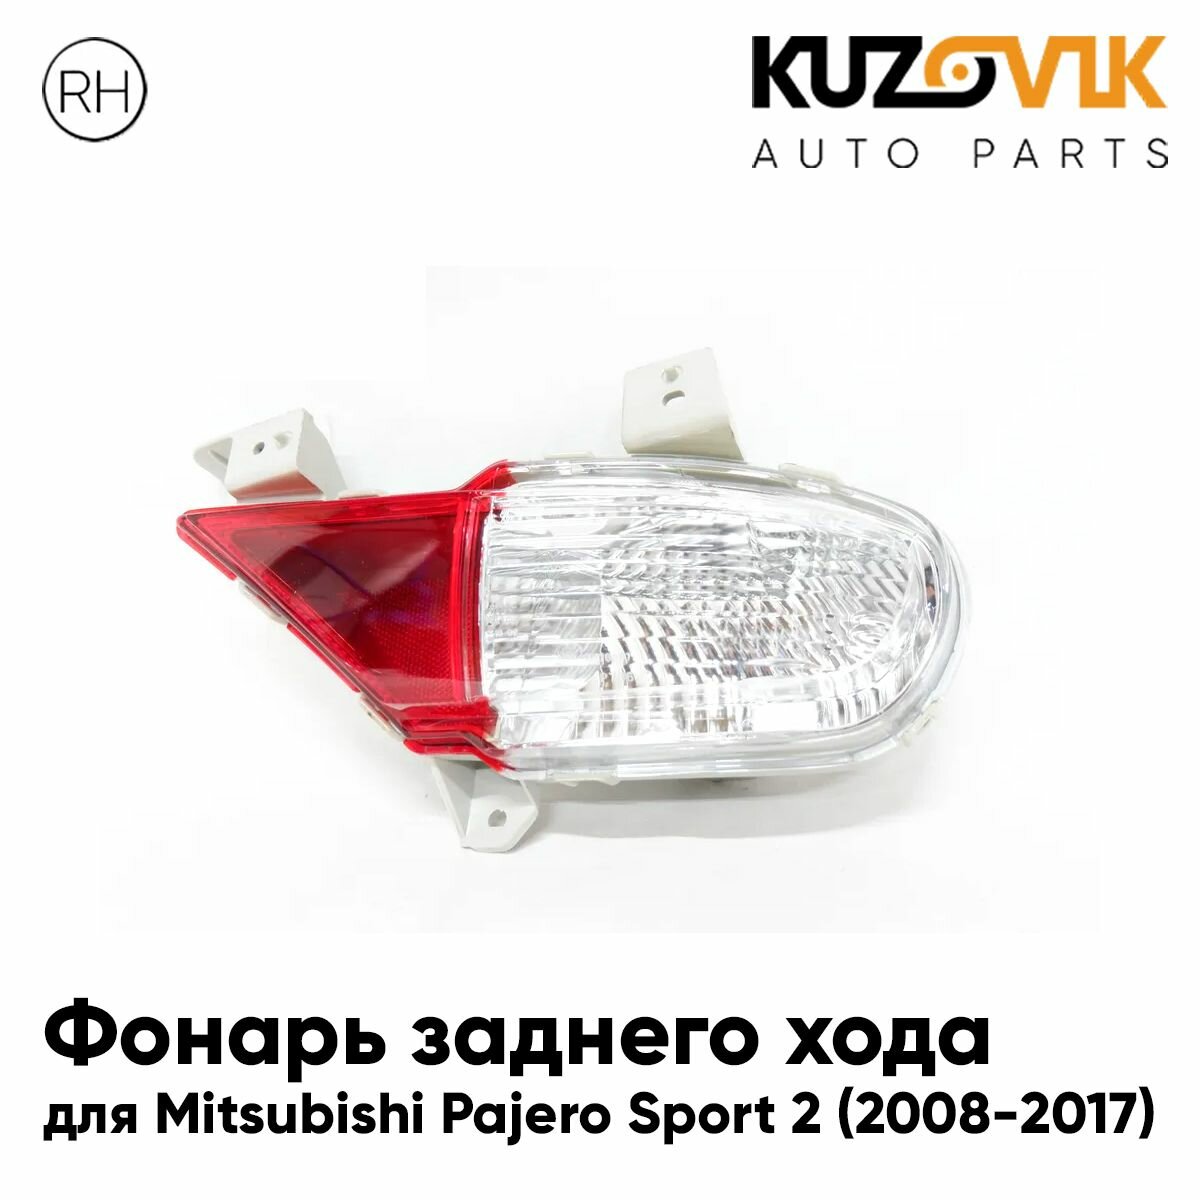 Фонарь заднего хода для Митсубиси Паджеро Спорт 2 Mitsubishi Pajero Sport 2 (2008-2017) правый